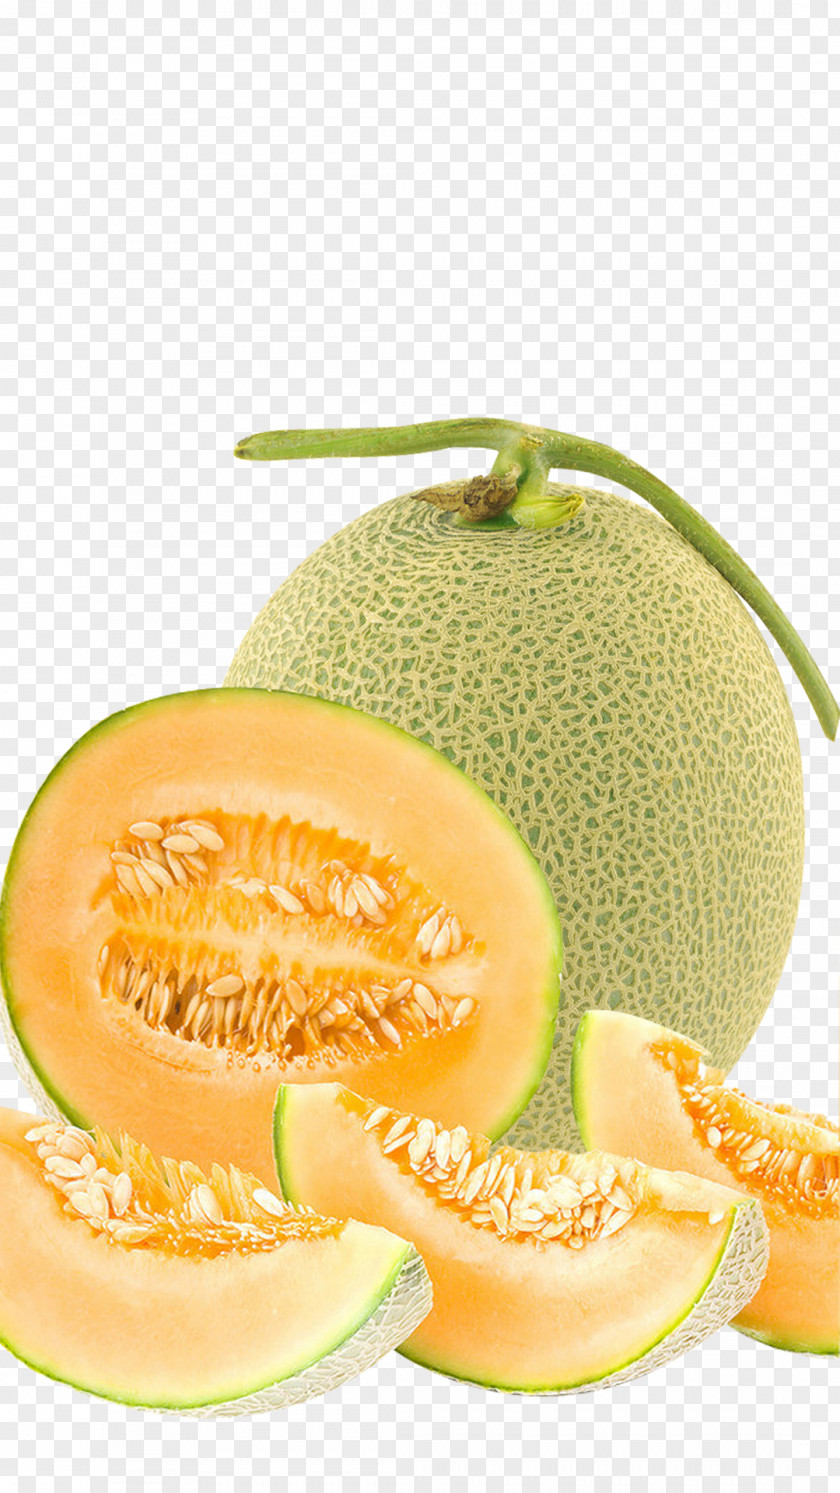 Sweet Melon Juice Cantaloupe Frutti Di Bosco Fruit Watermelon PNG